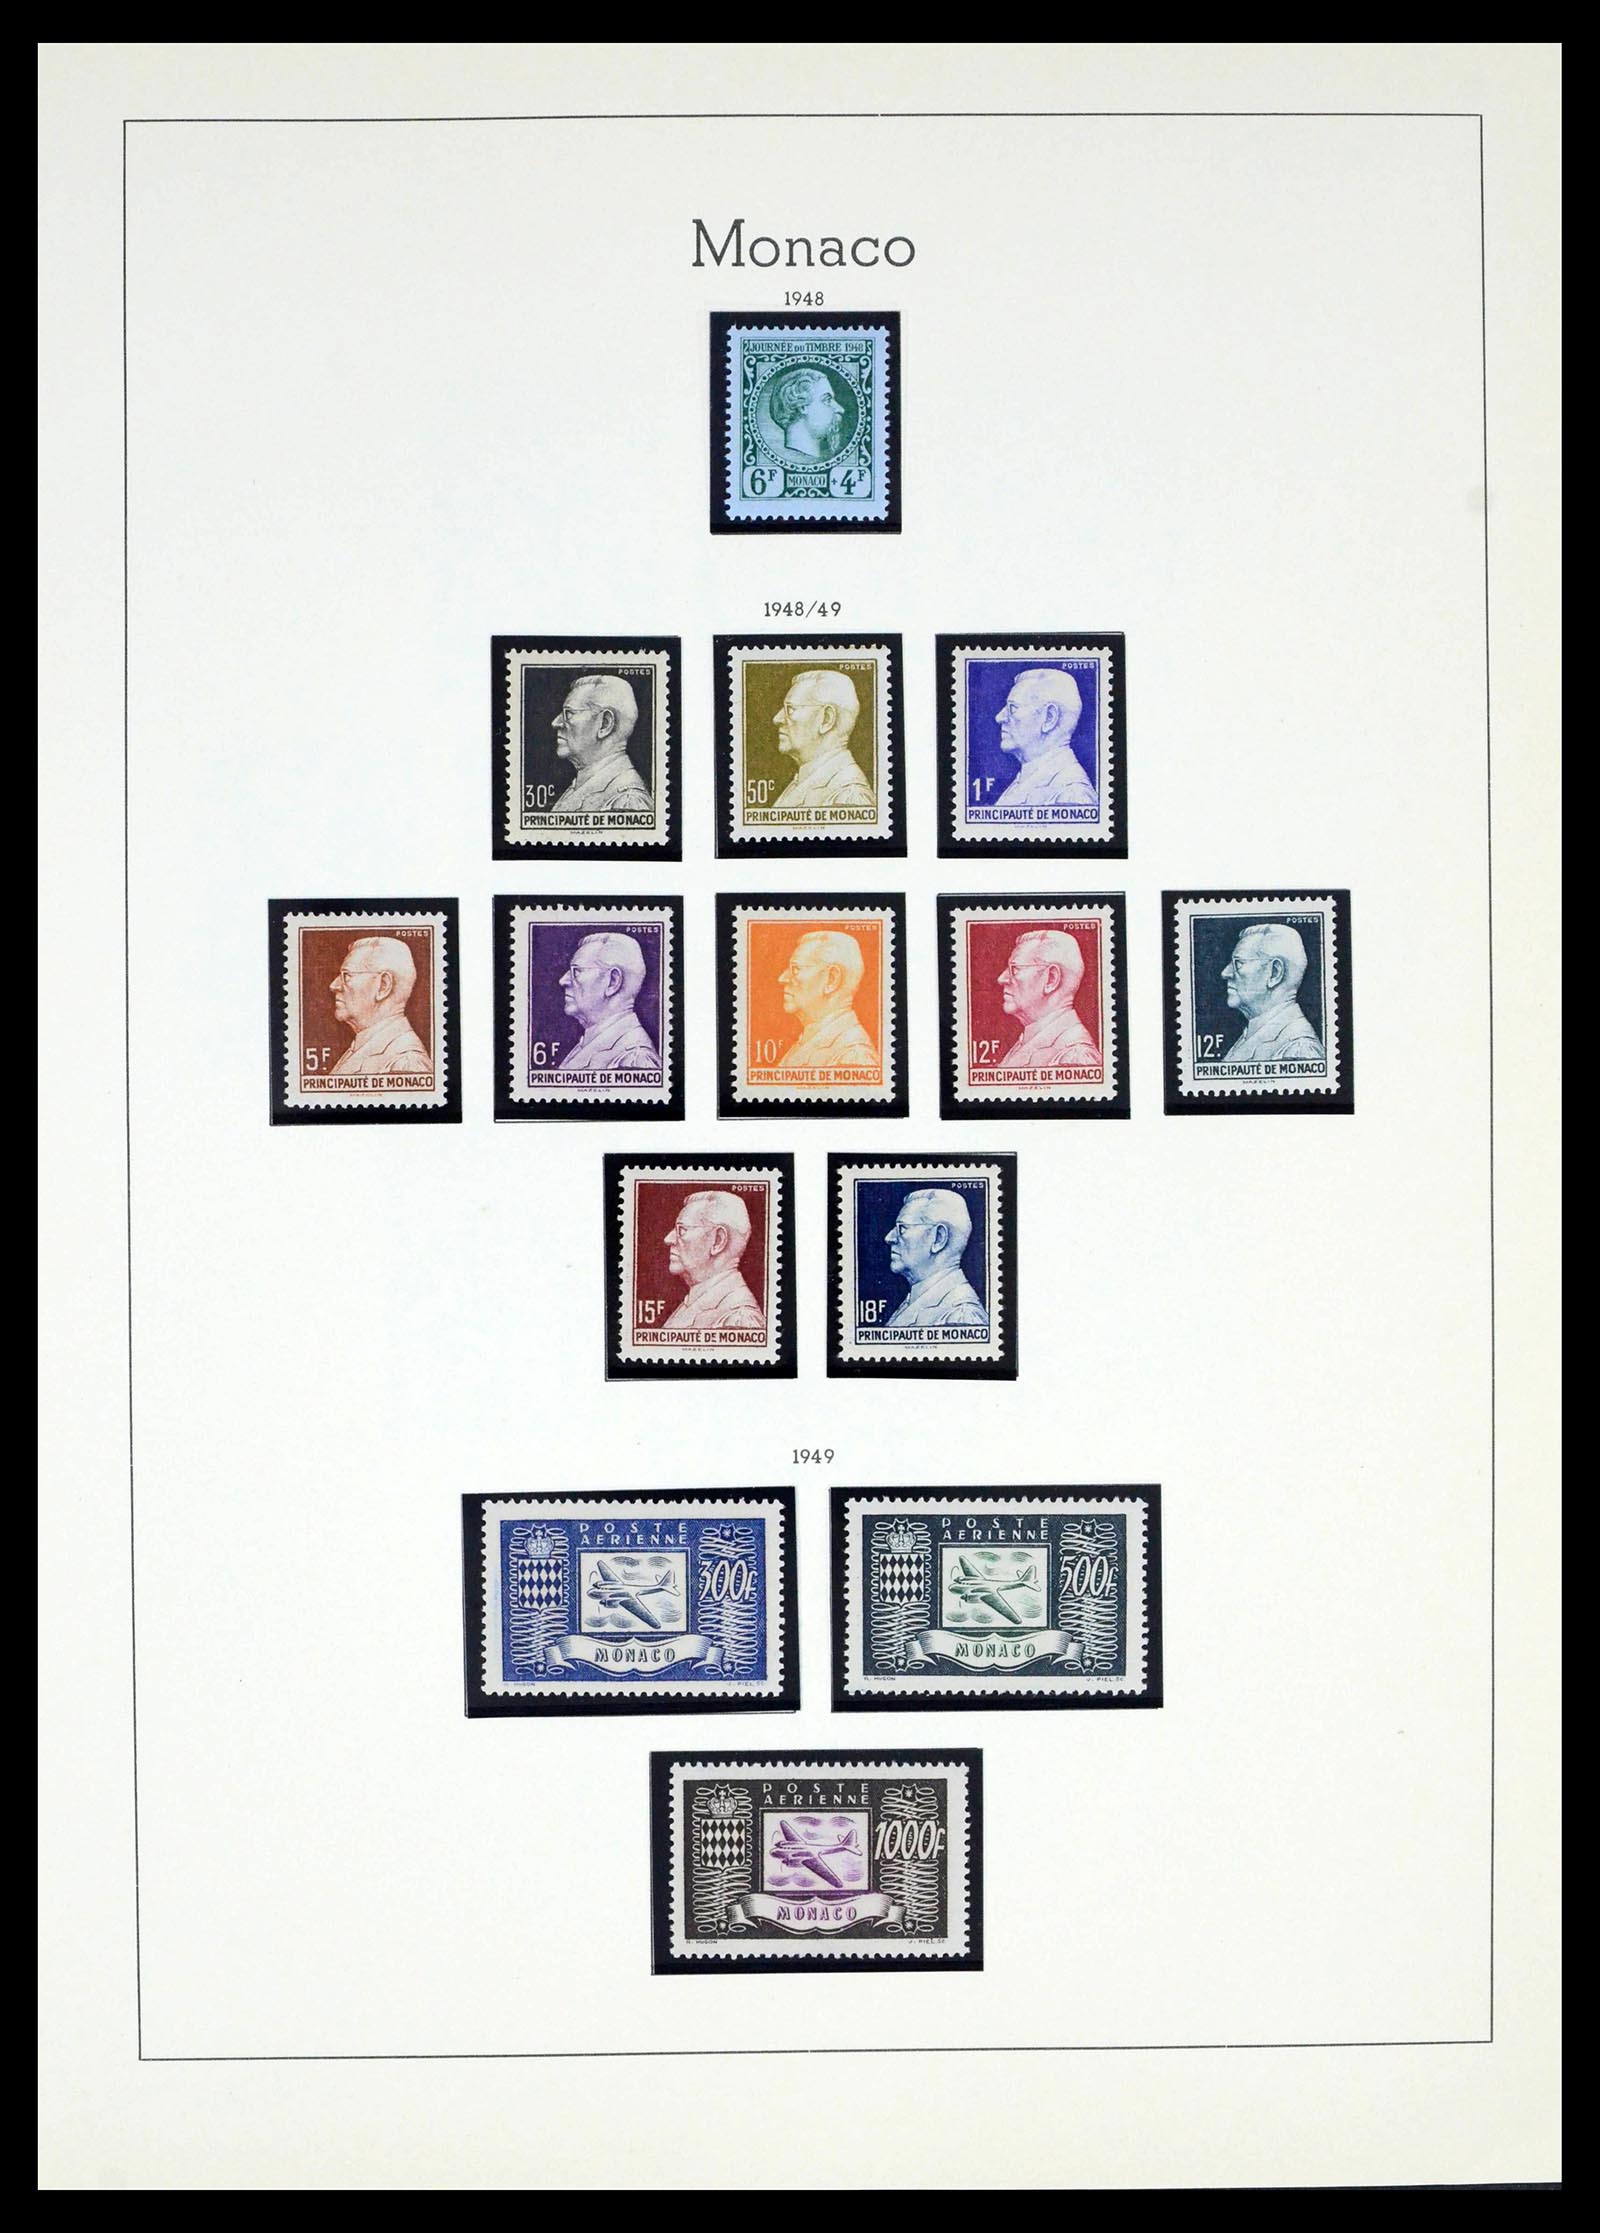 39392 0033 - Stamp collection 39392 Monaco 1885-1999.